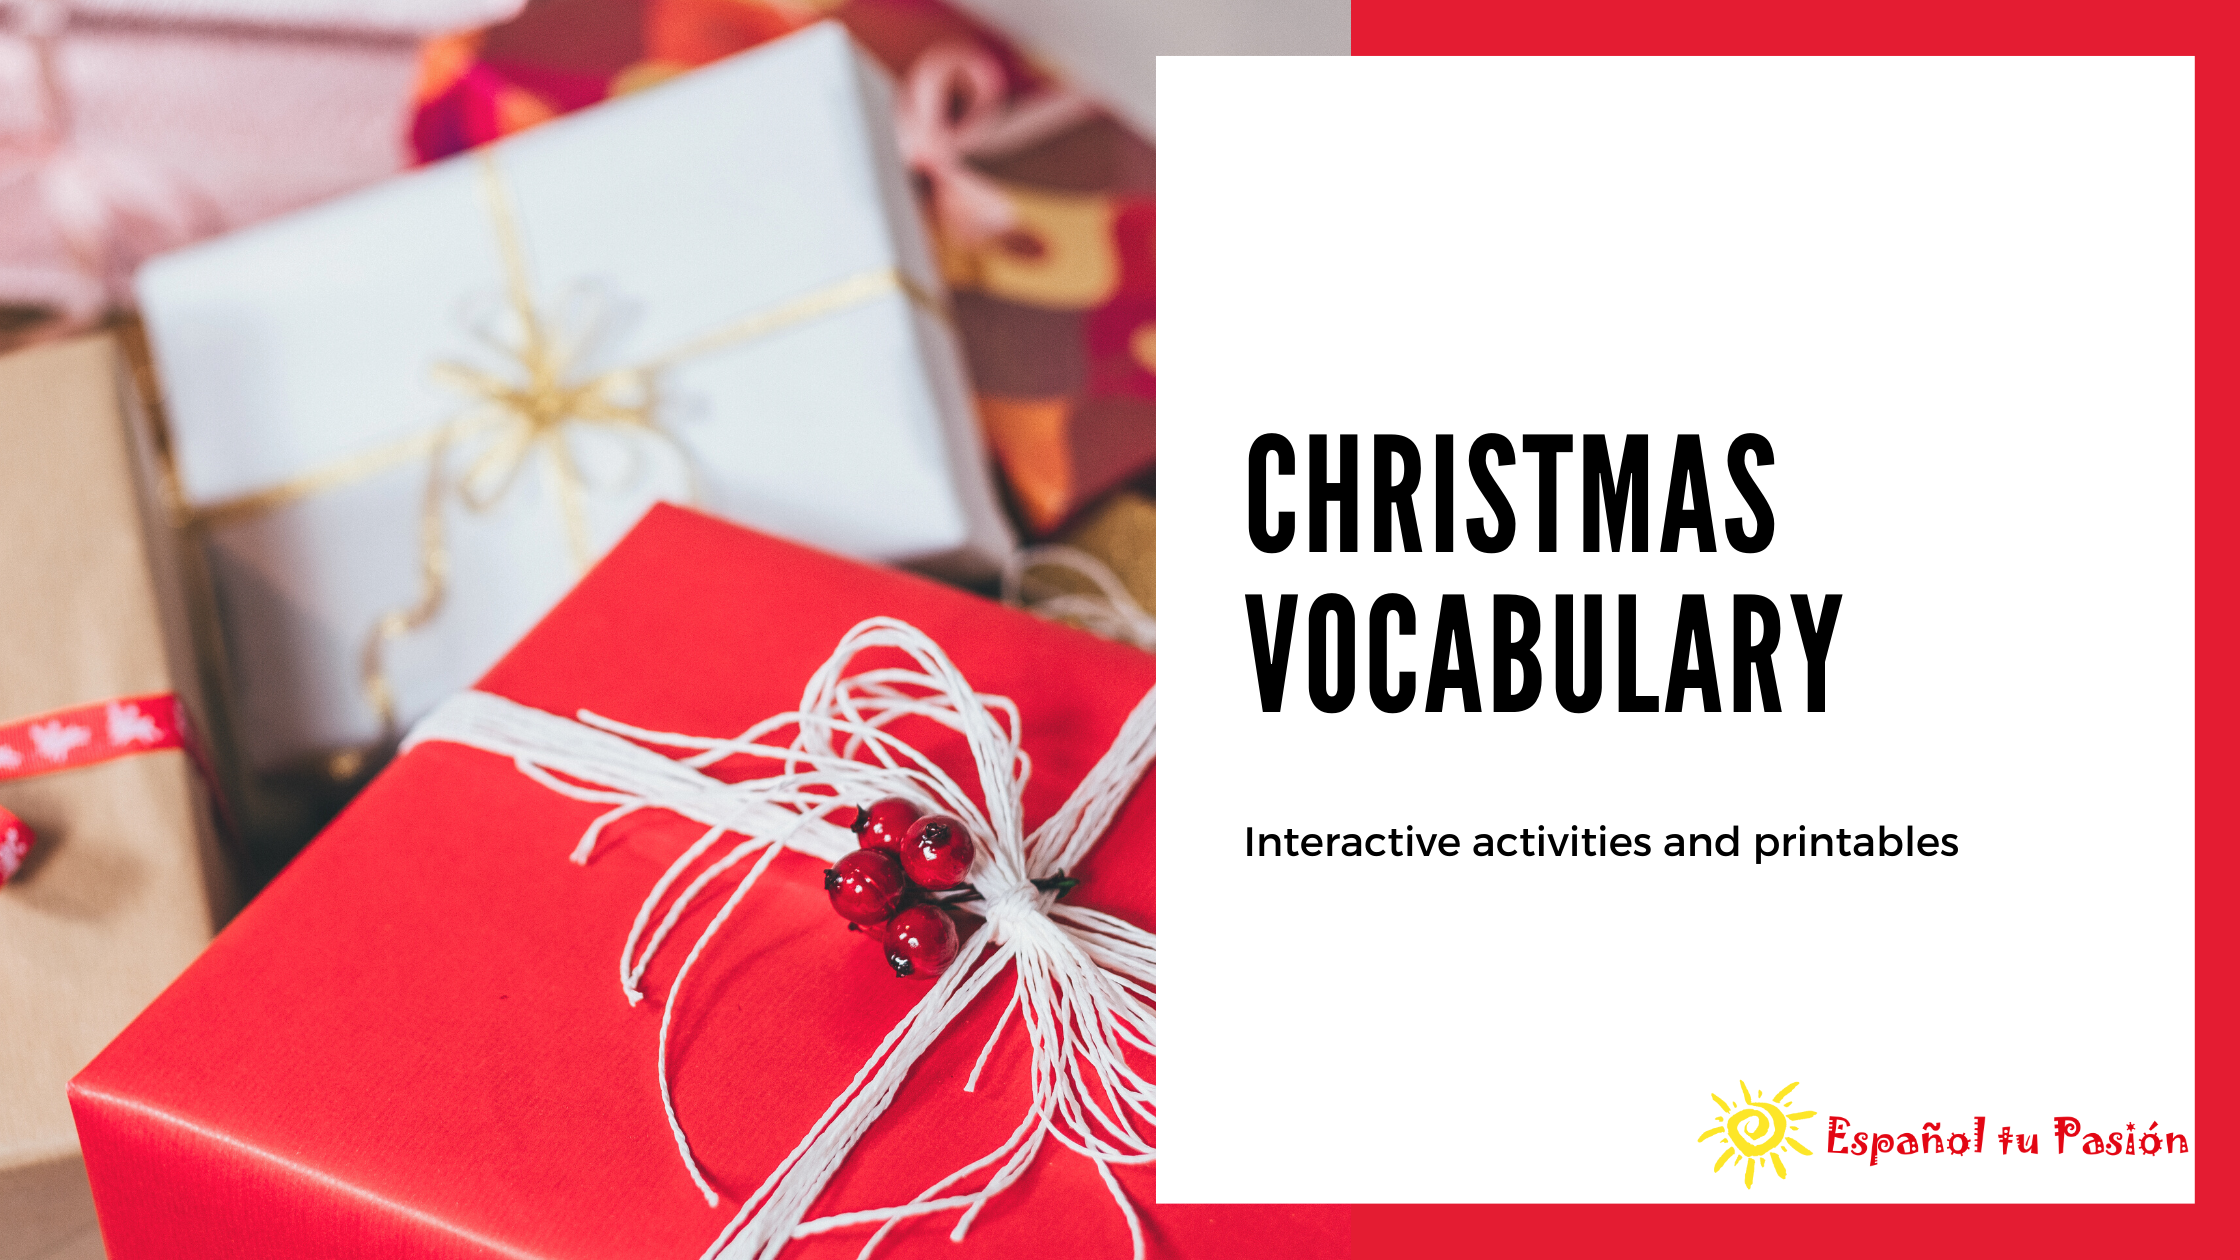 Christmas vocabulary in Spanish